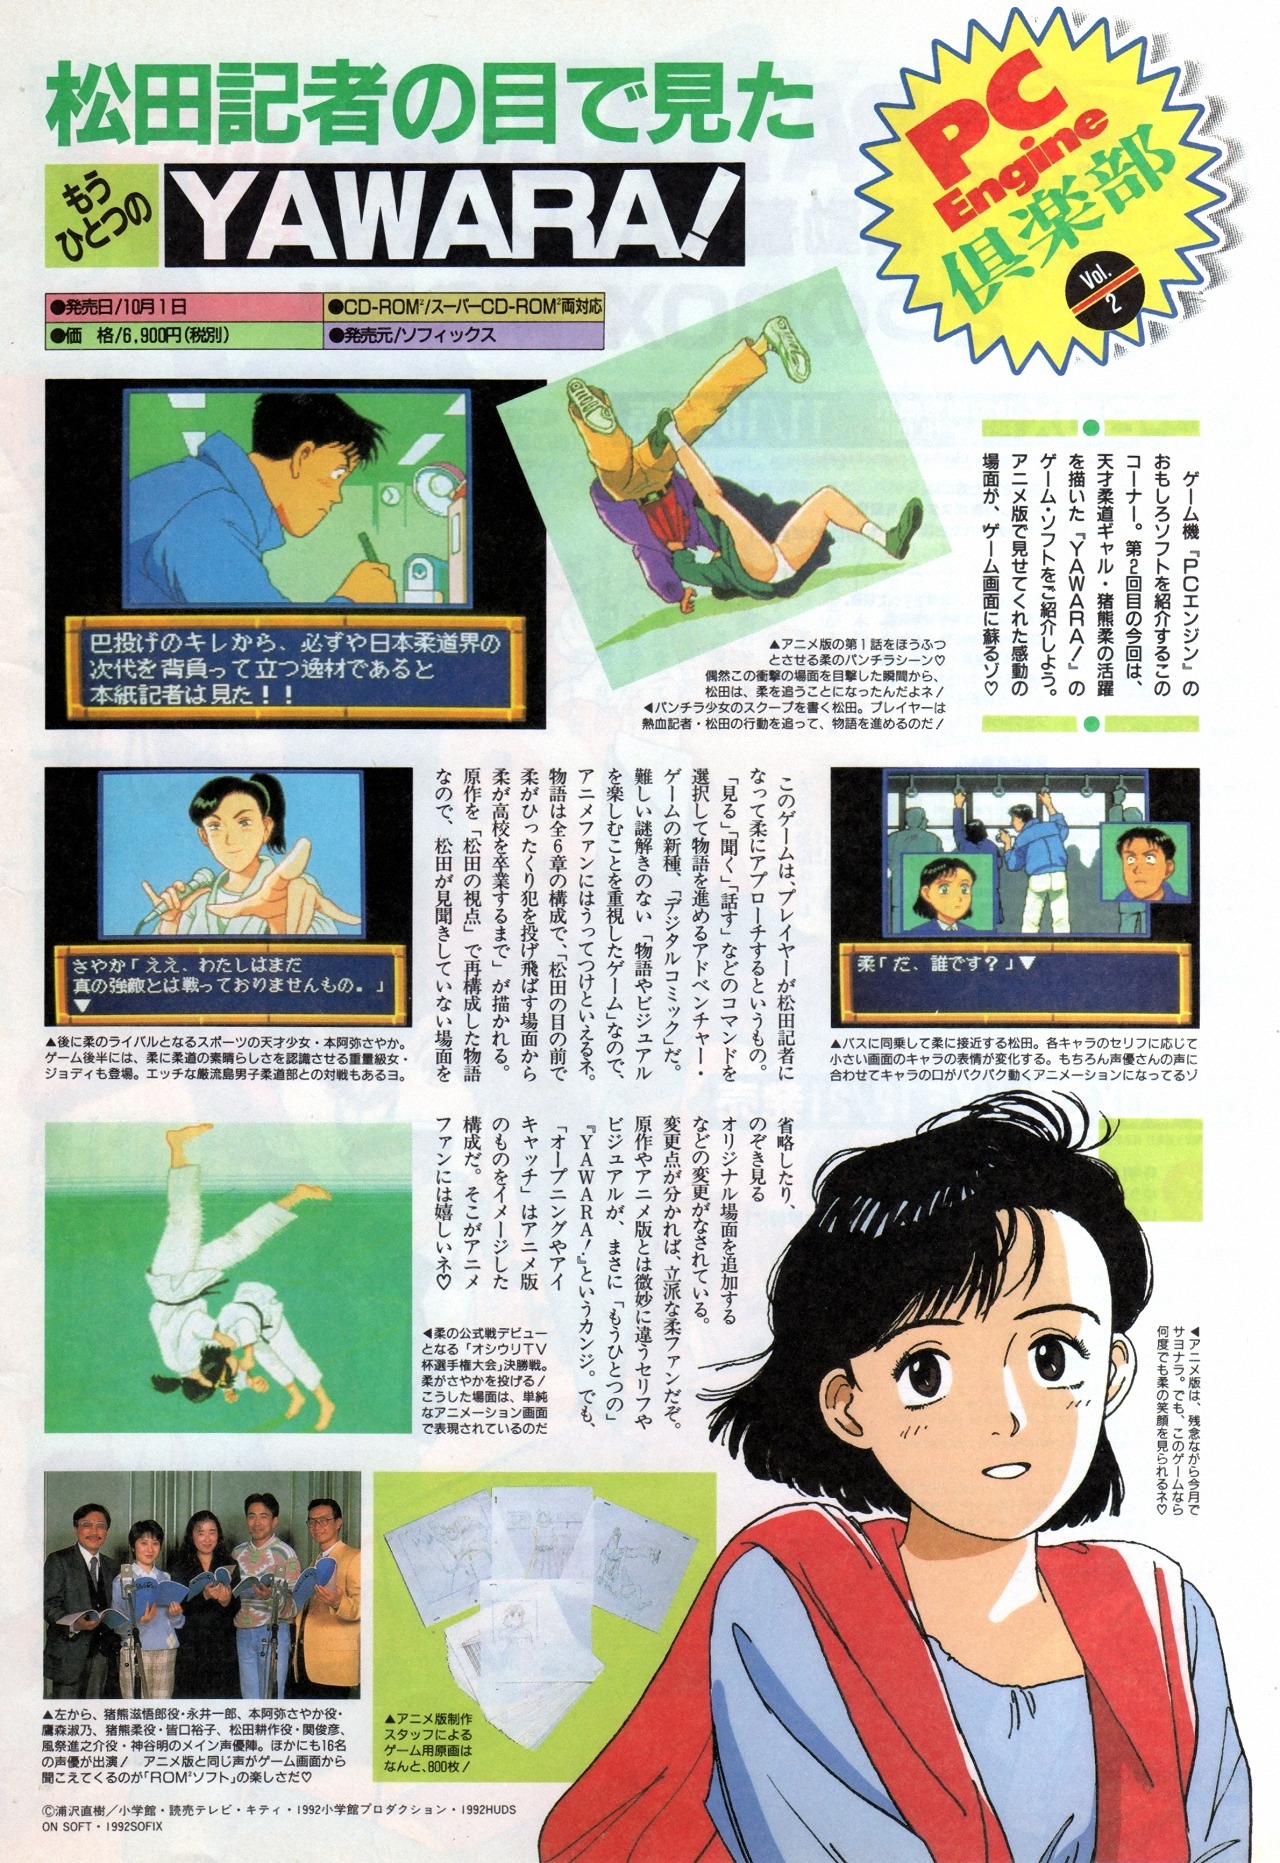 Anim'Archive — Yawara! digital comic for PC Engine / Animedia...